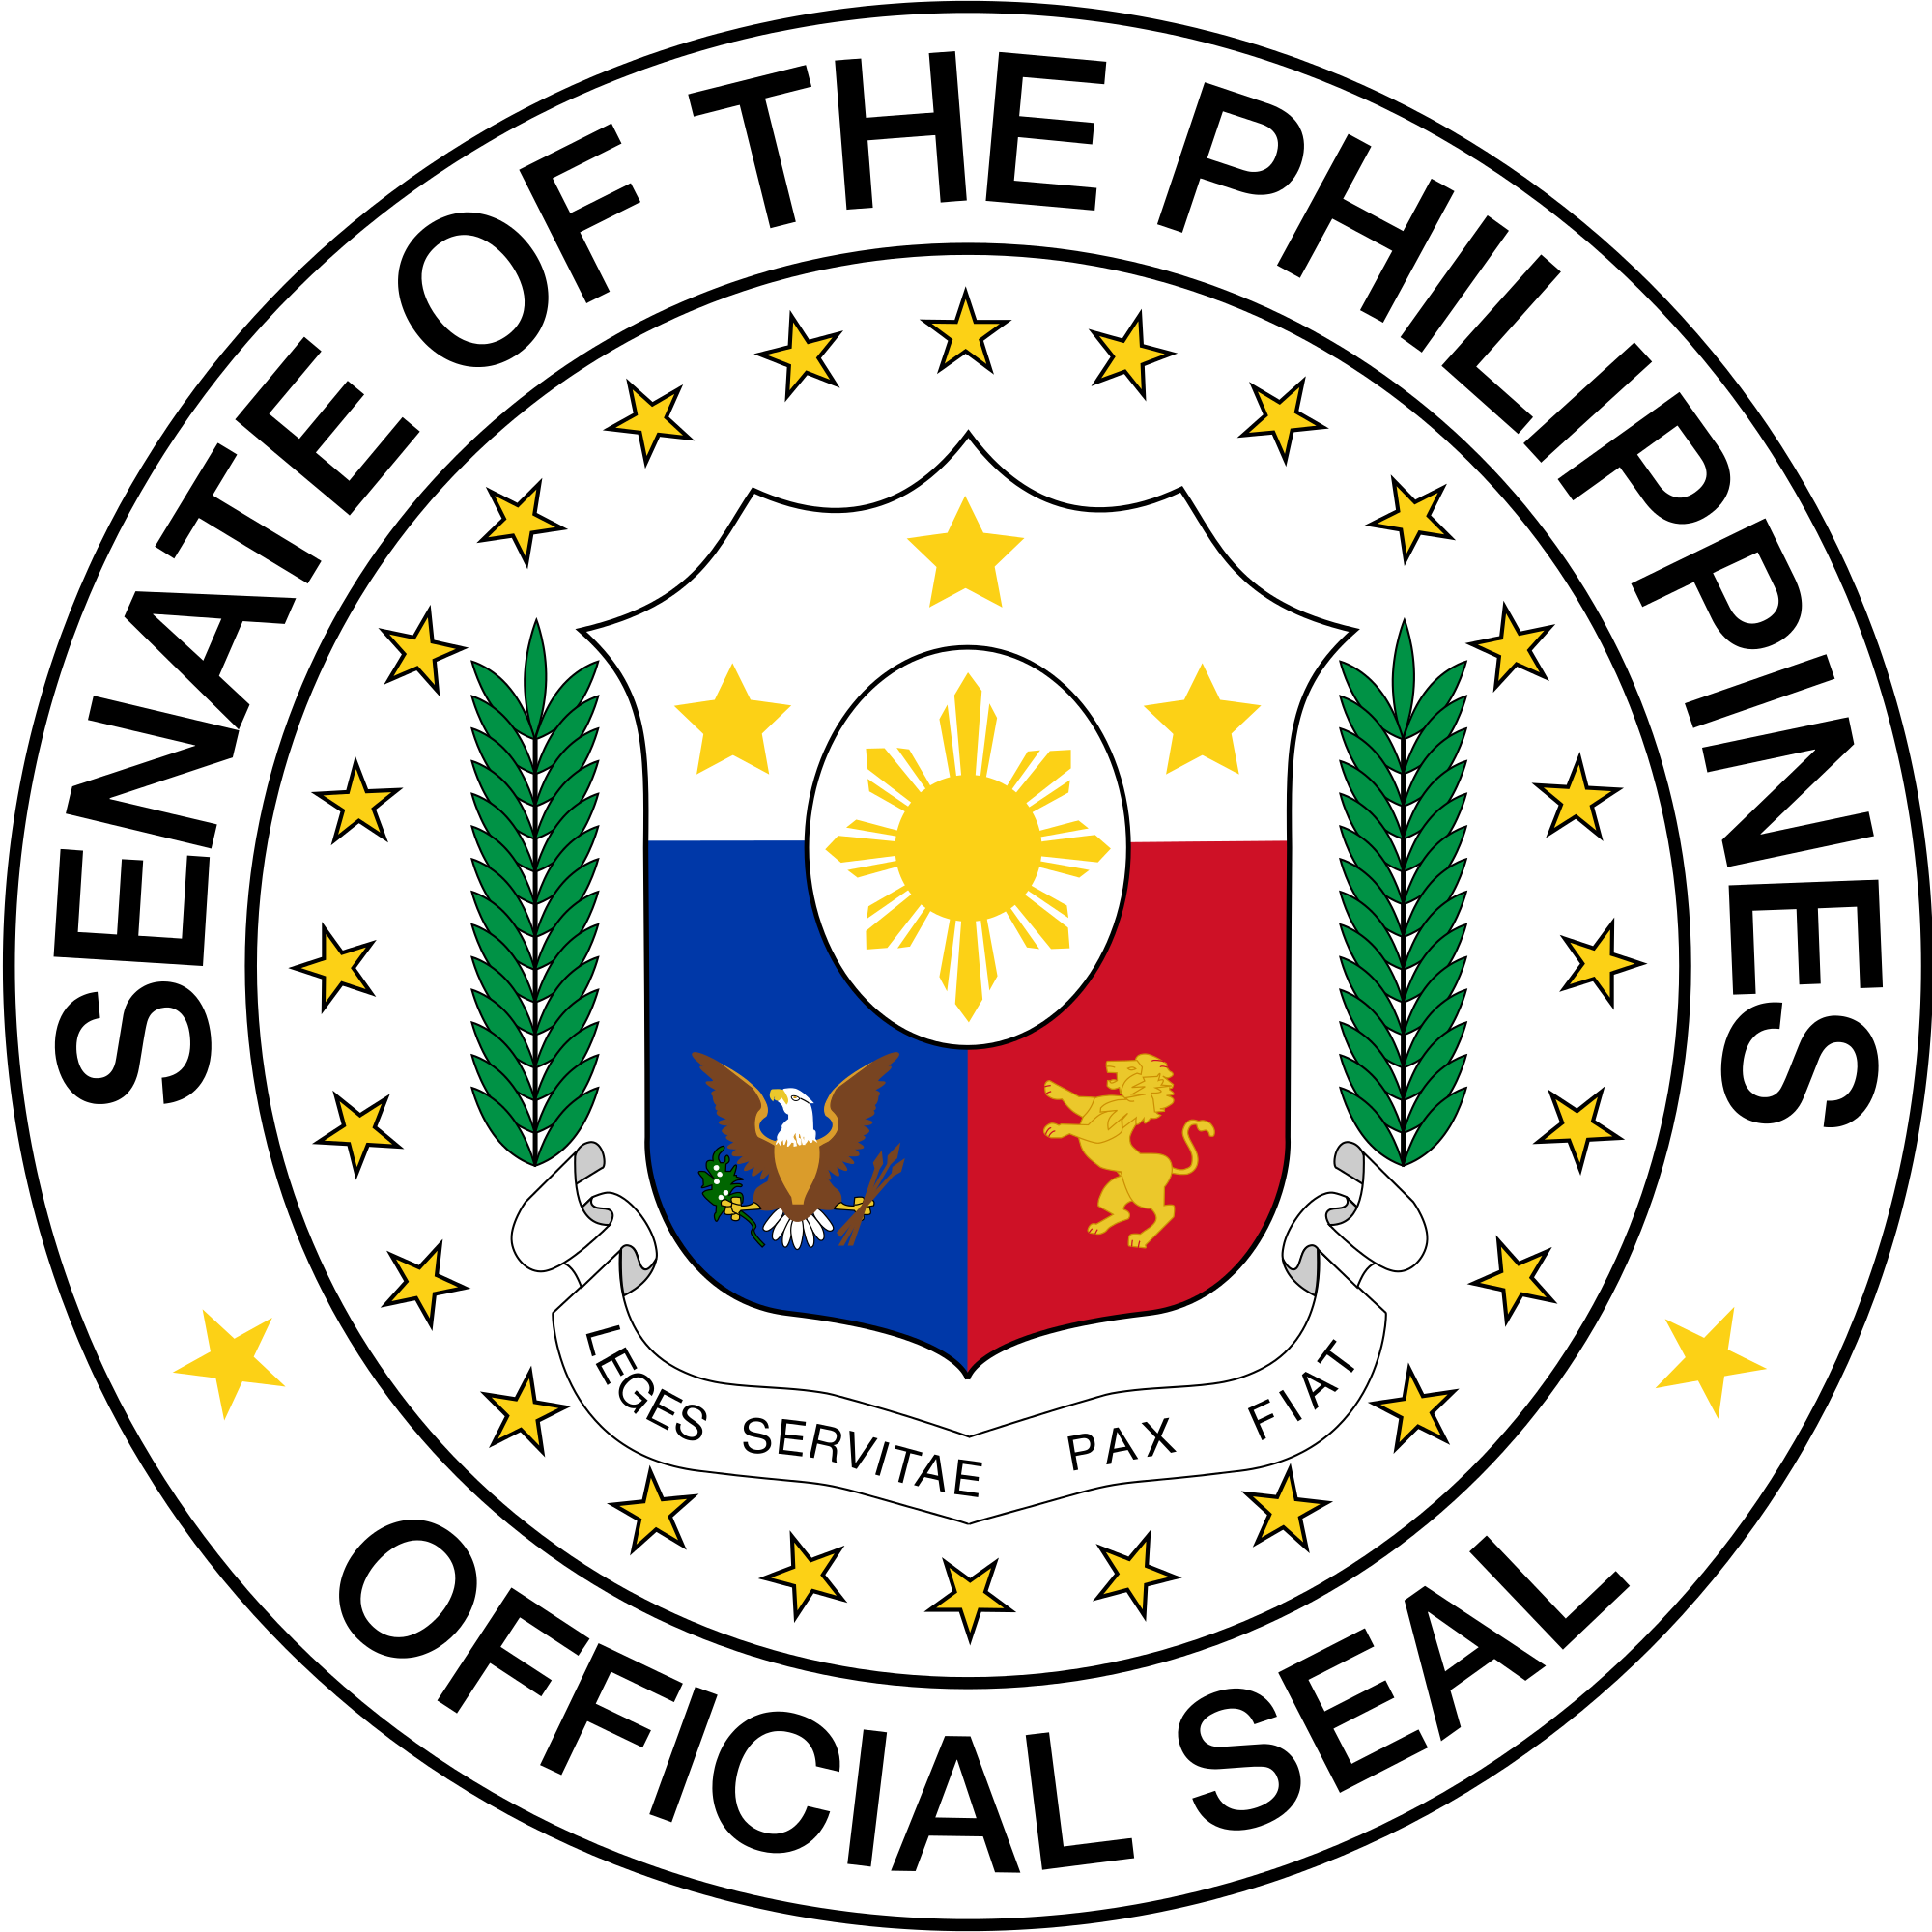 The Senate of the Philippines